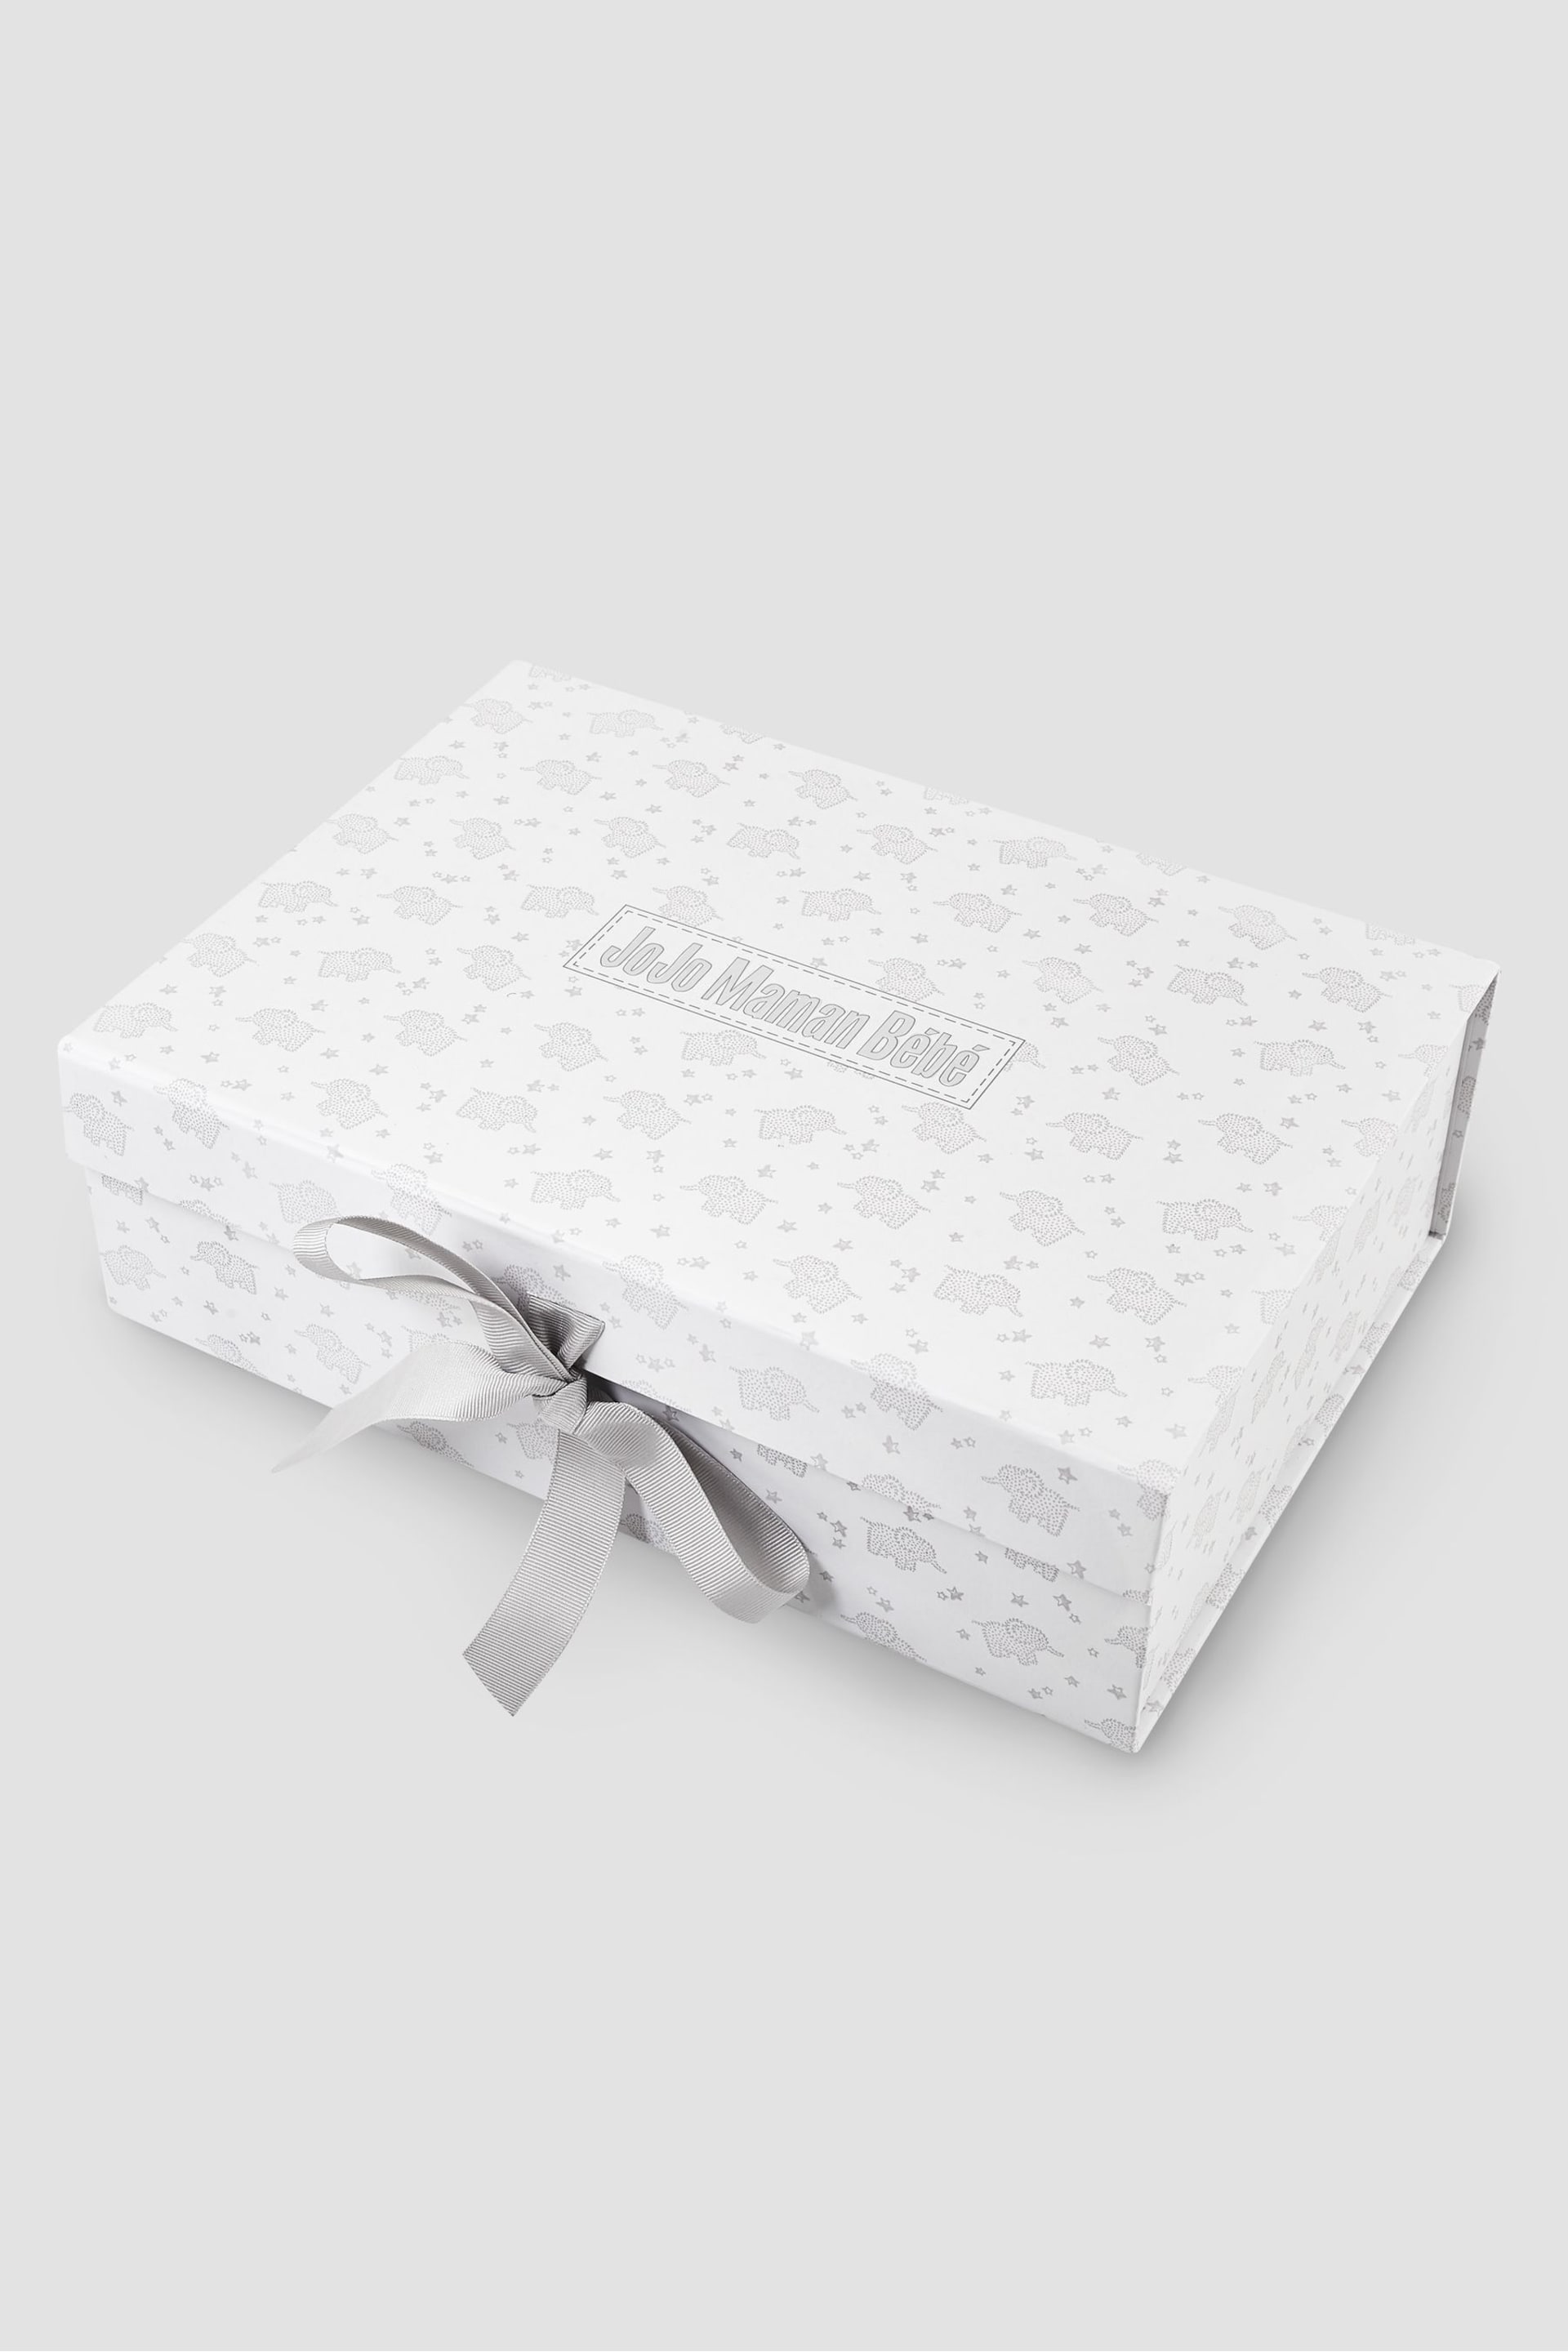 JoJo Maman Bébé Grey Star Gift Box - Image 1 of 3